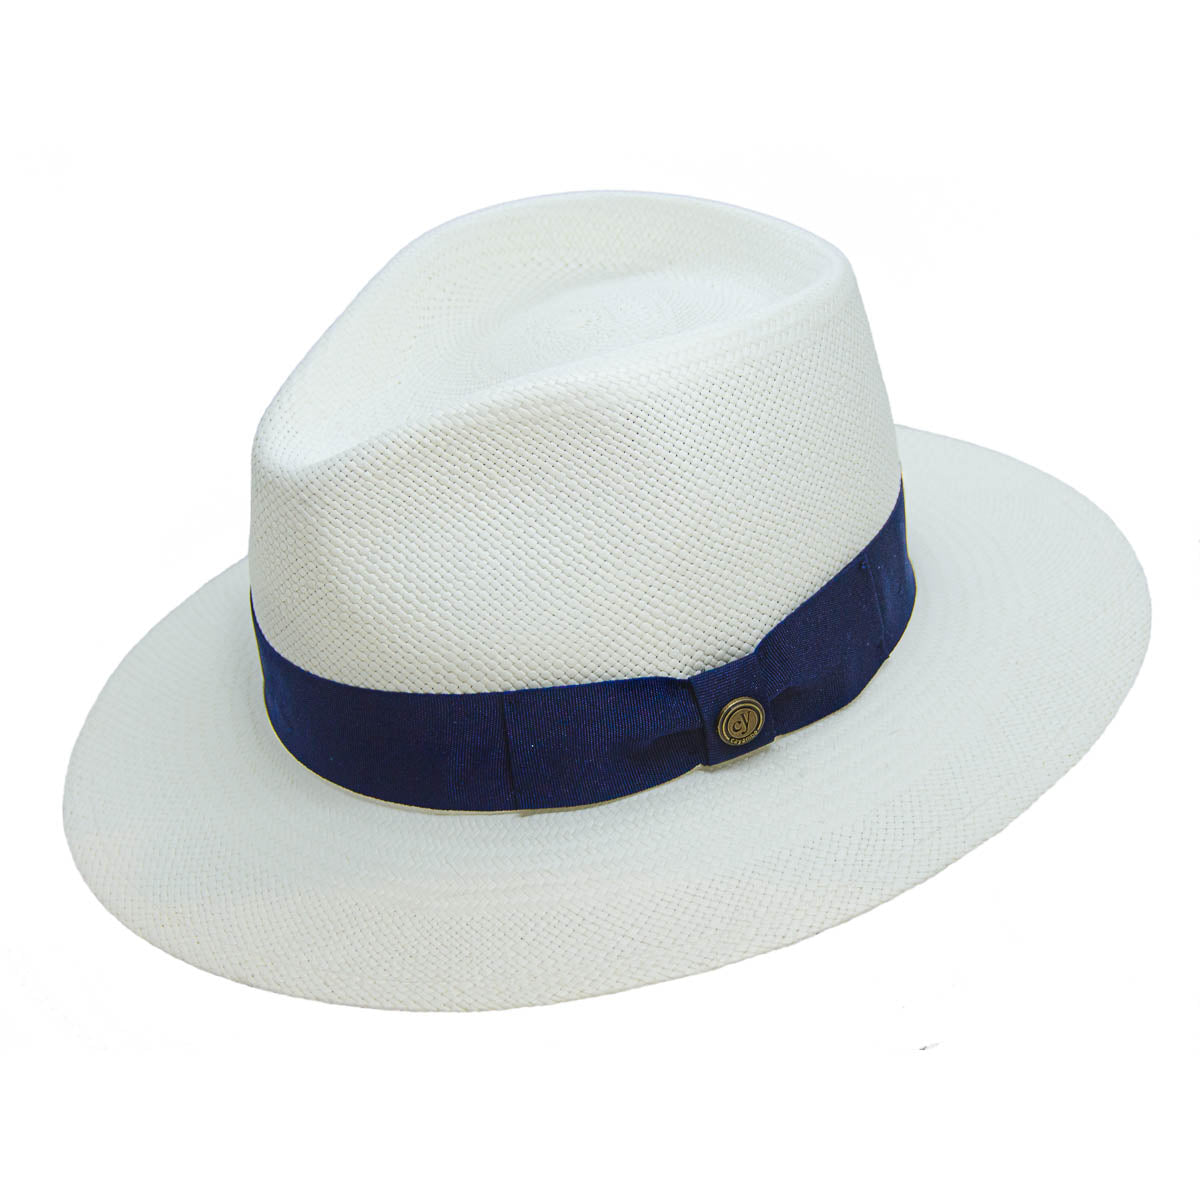 Varon Classic - Panama Hat - White-Navy